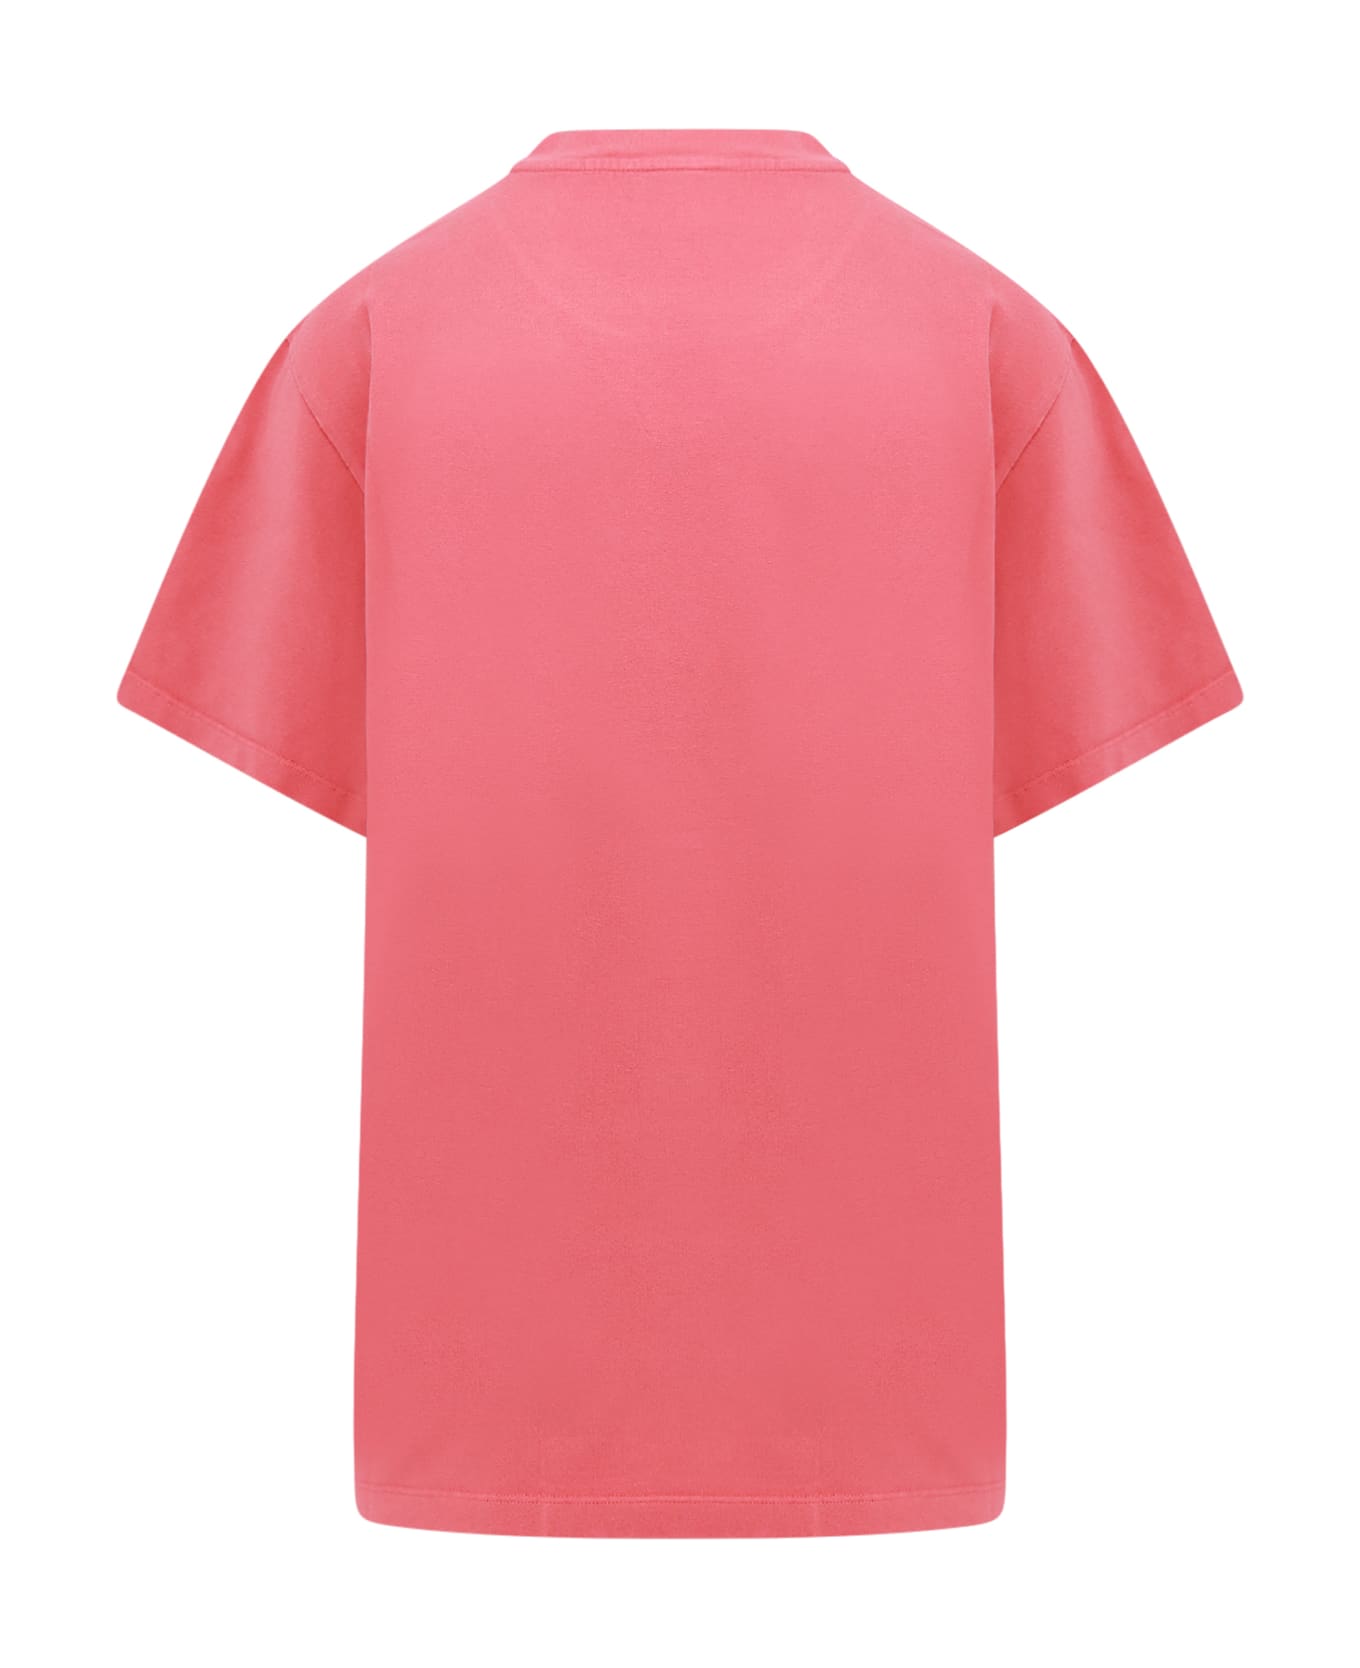 Stella McCartney Iconic T-shirt - Pink Tシャツ